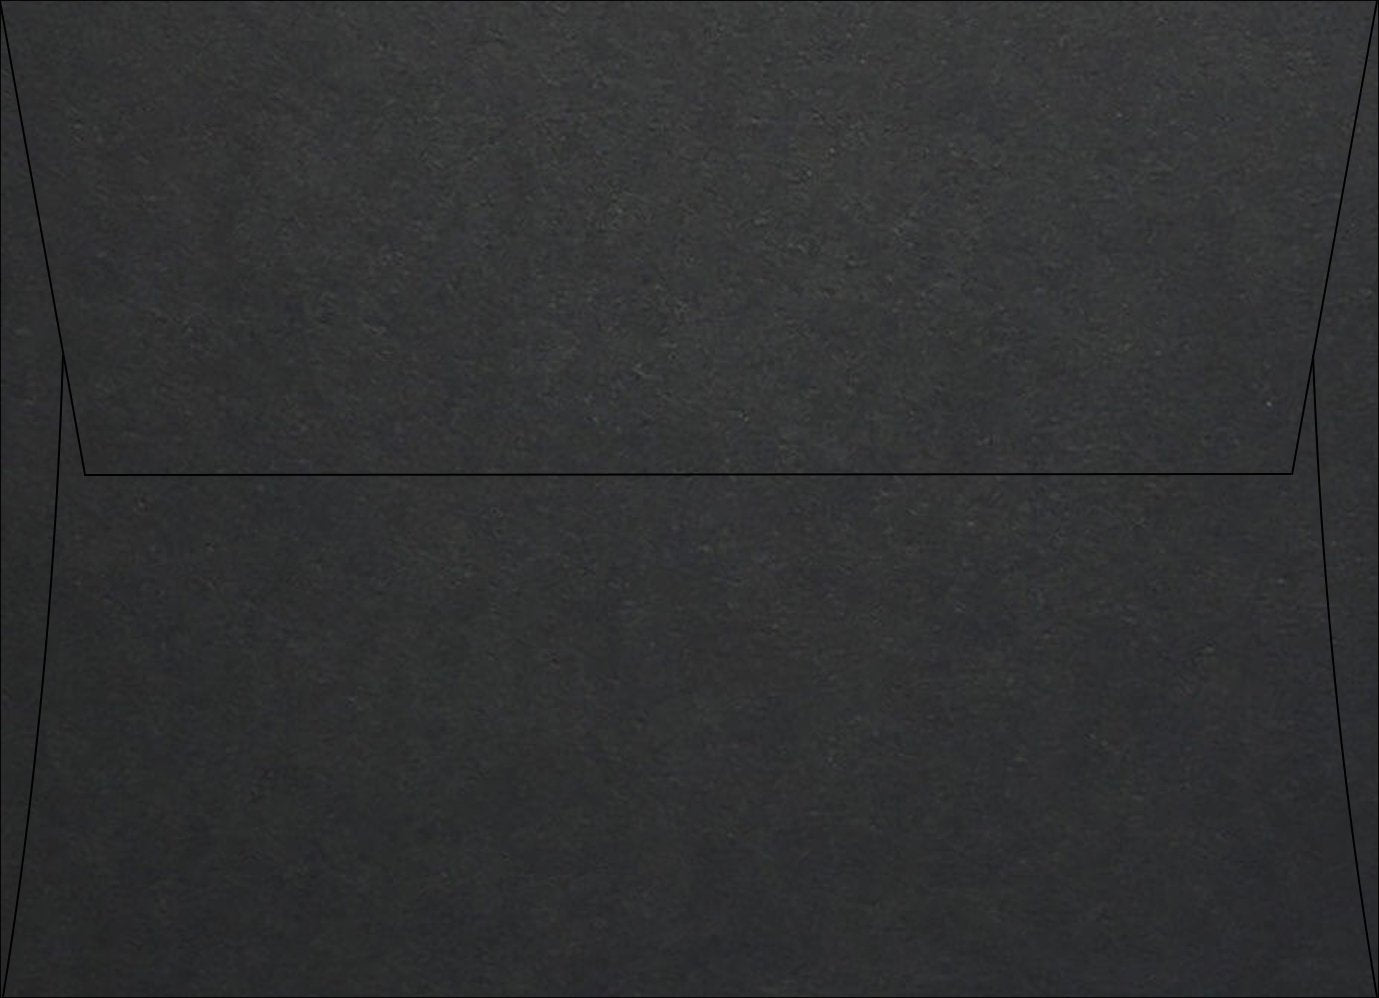 Blacktop Square Flap Envelopes